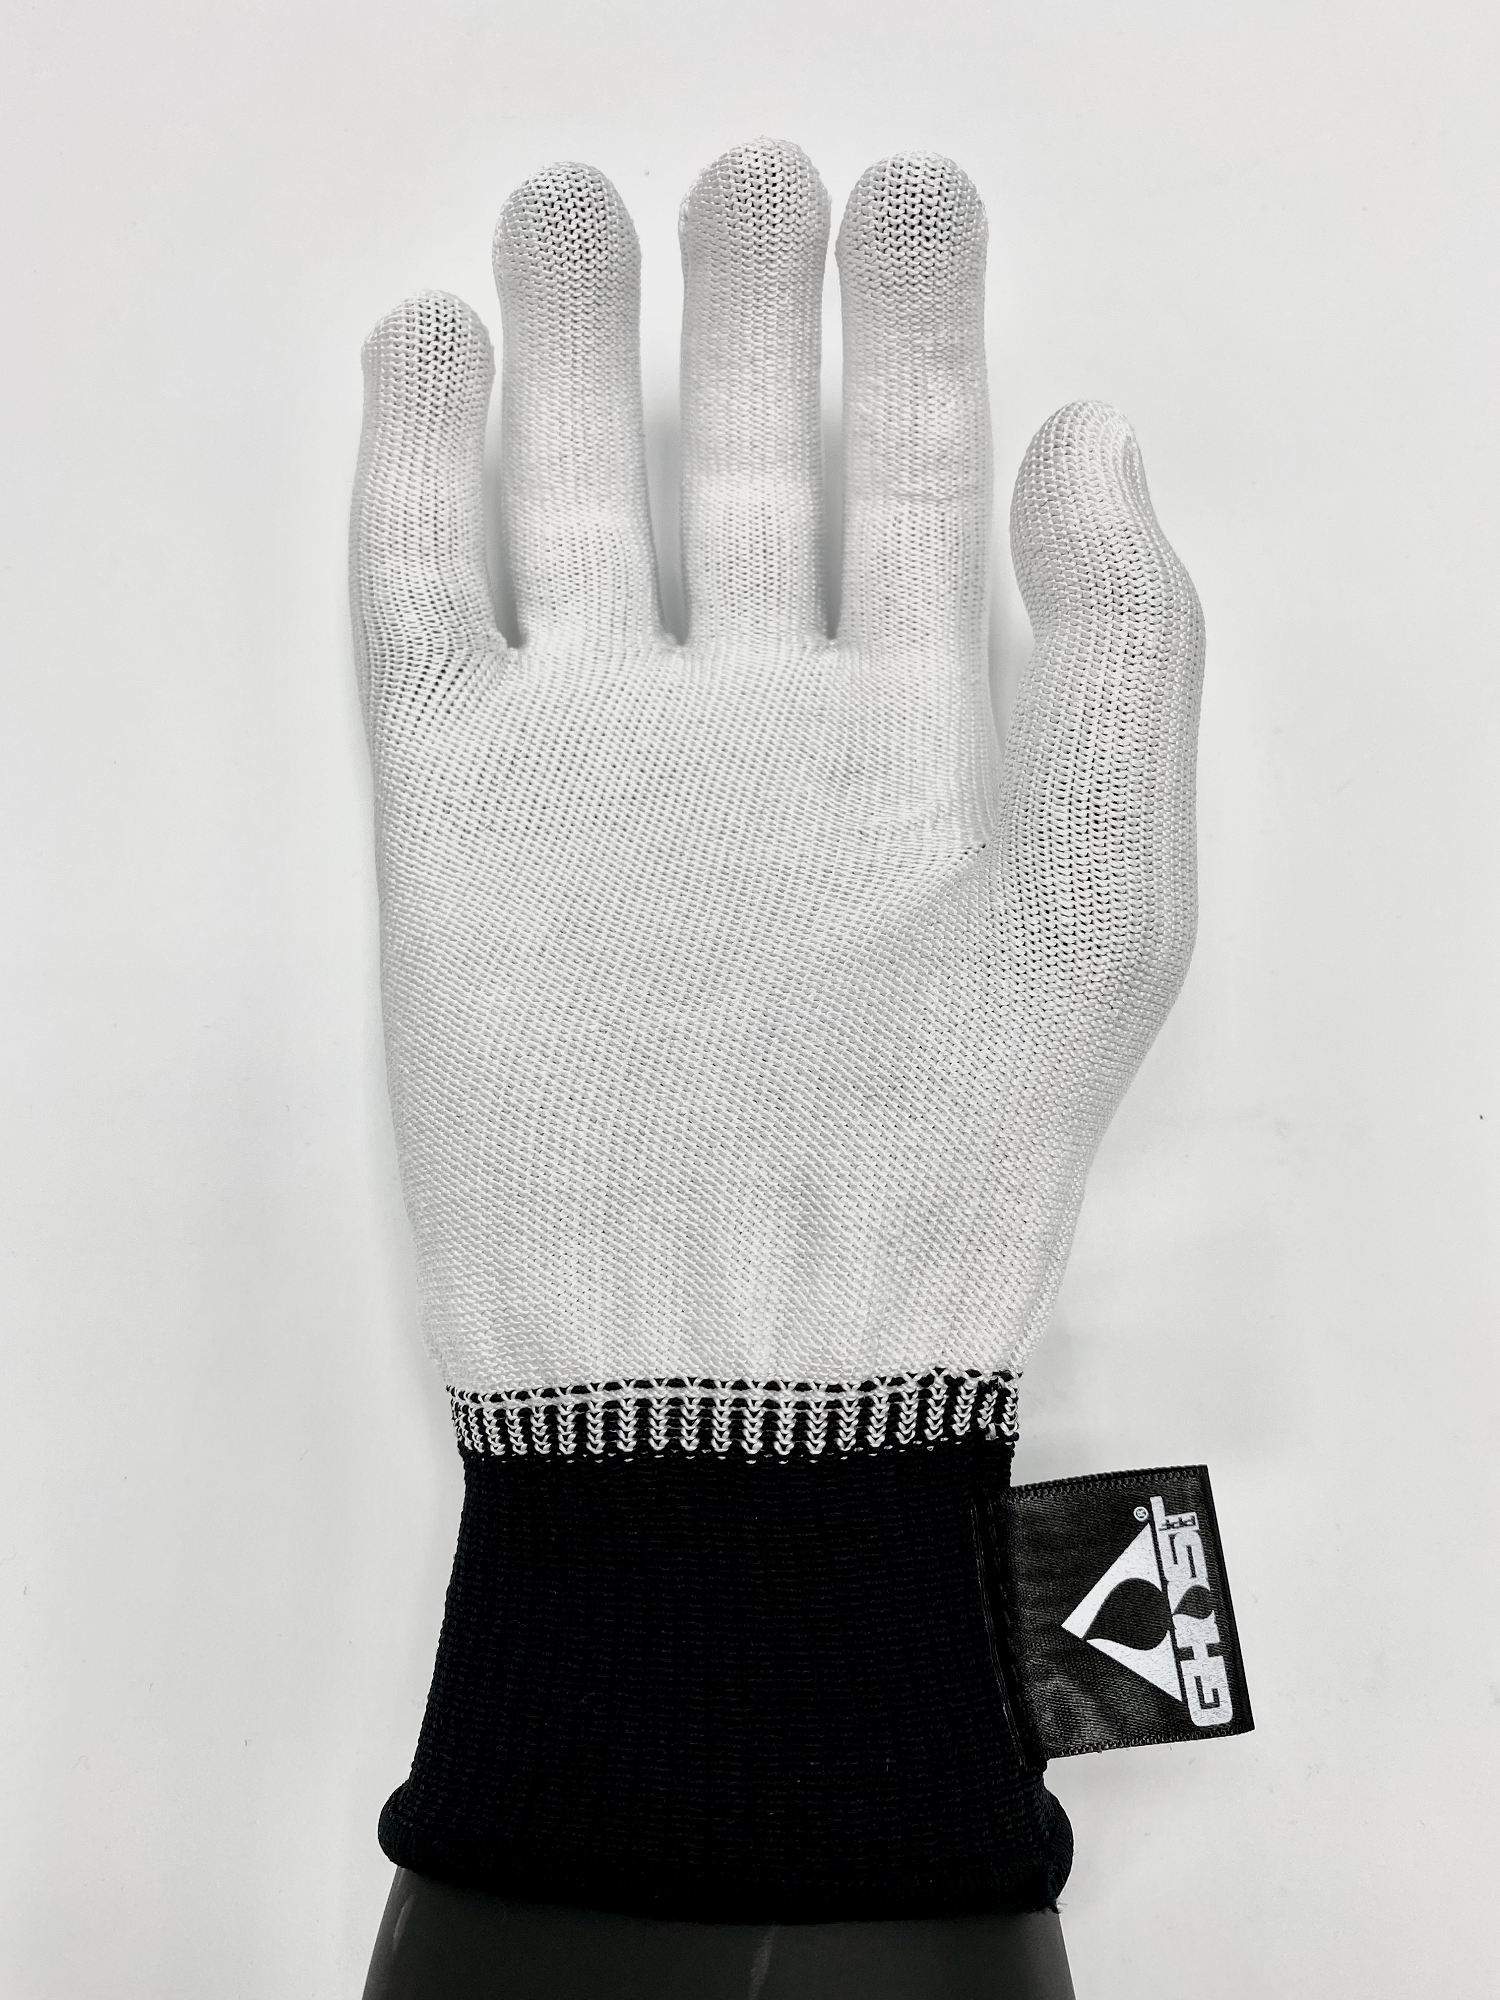 WrapGlove Vinyl Wrap Gloves (Small) - 1 Pair